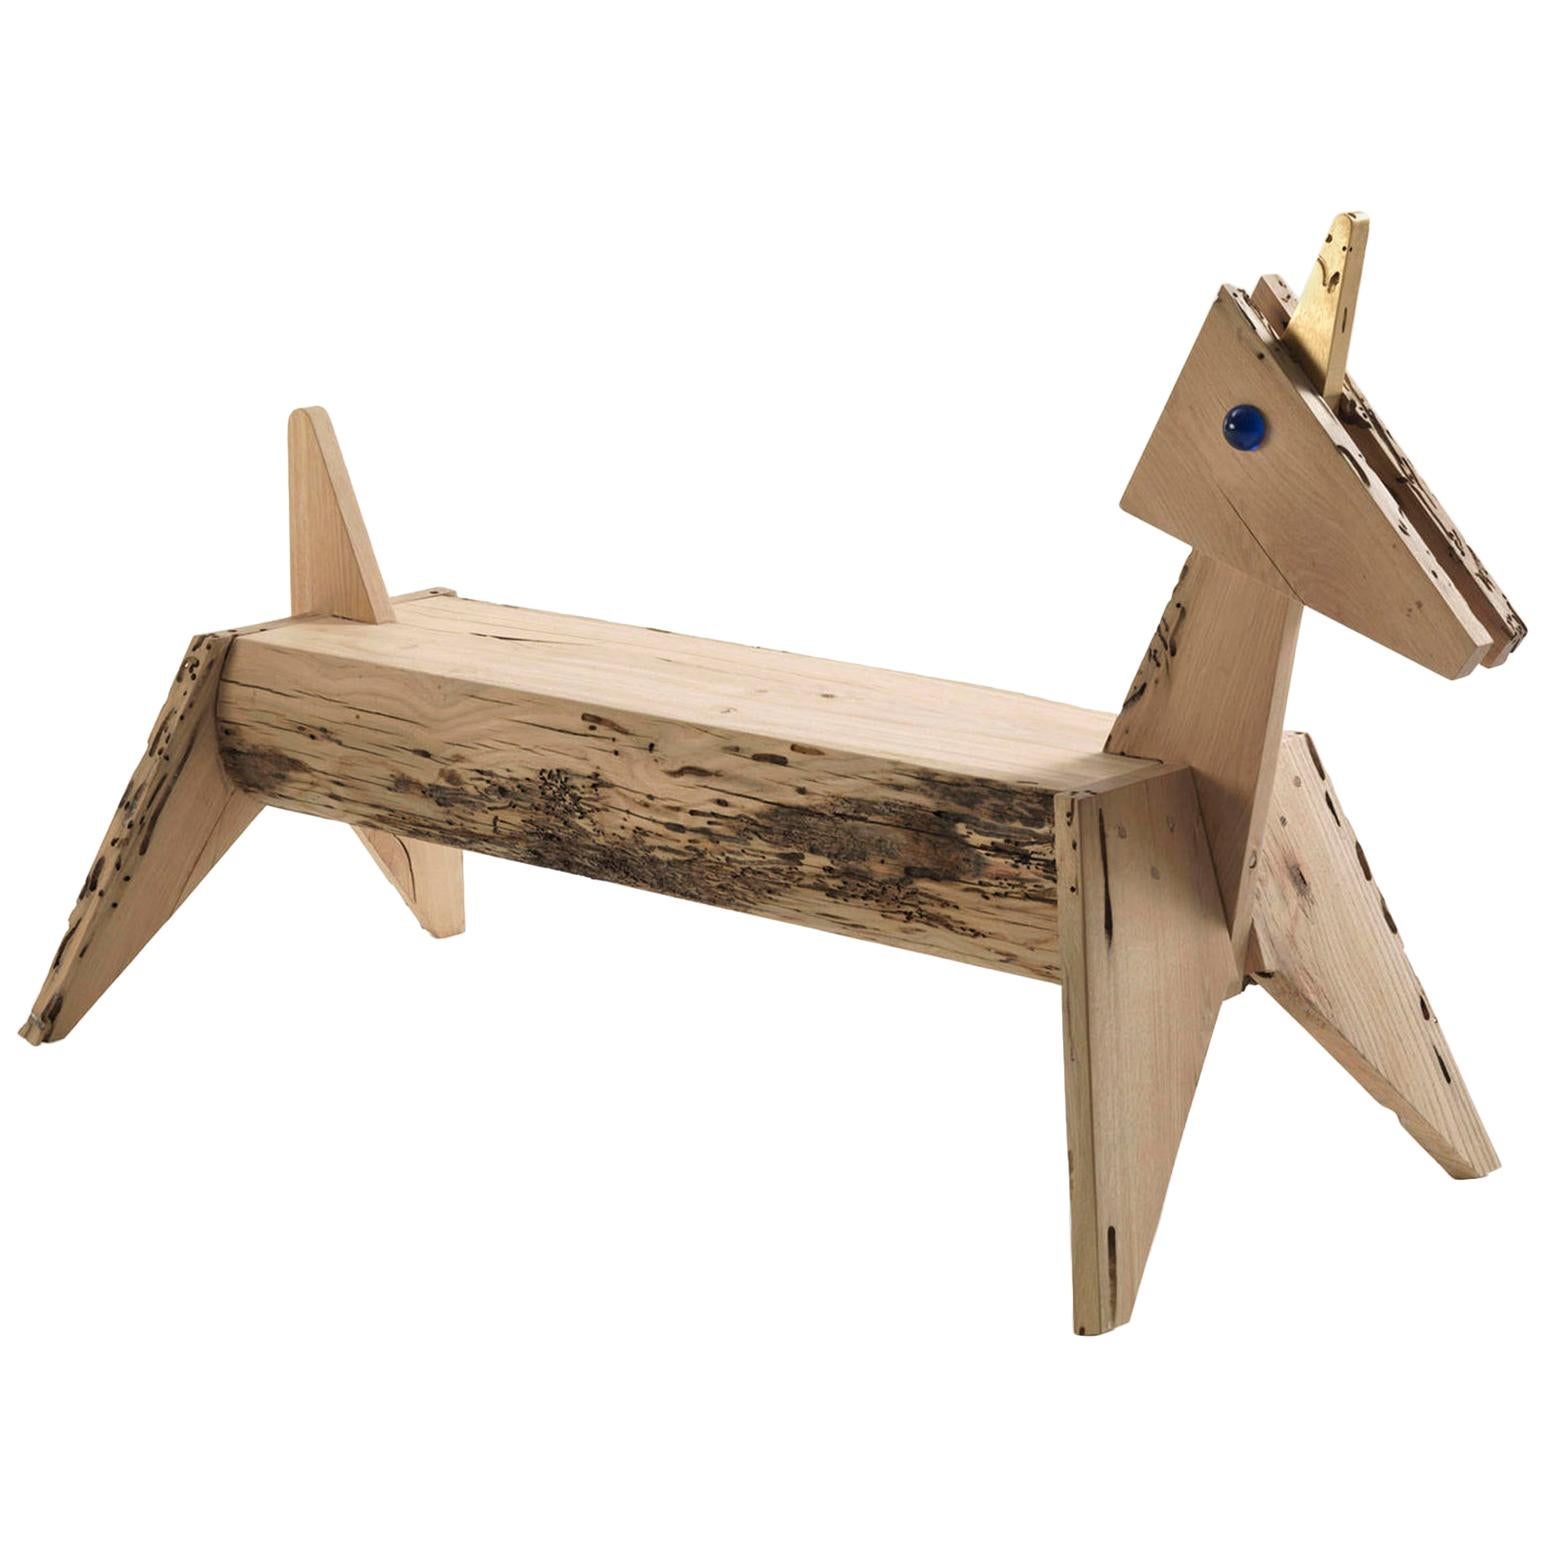 Unicorn Bench